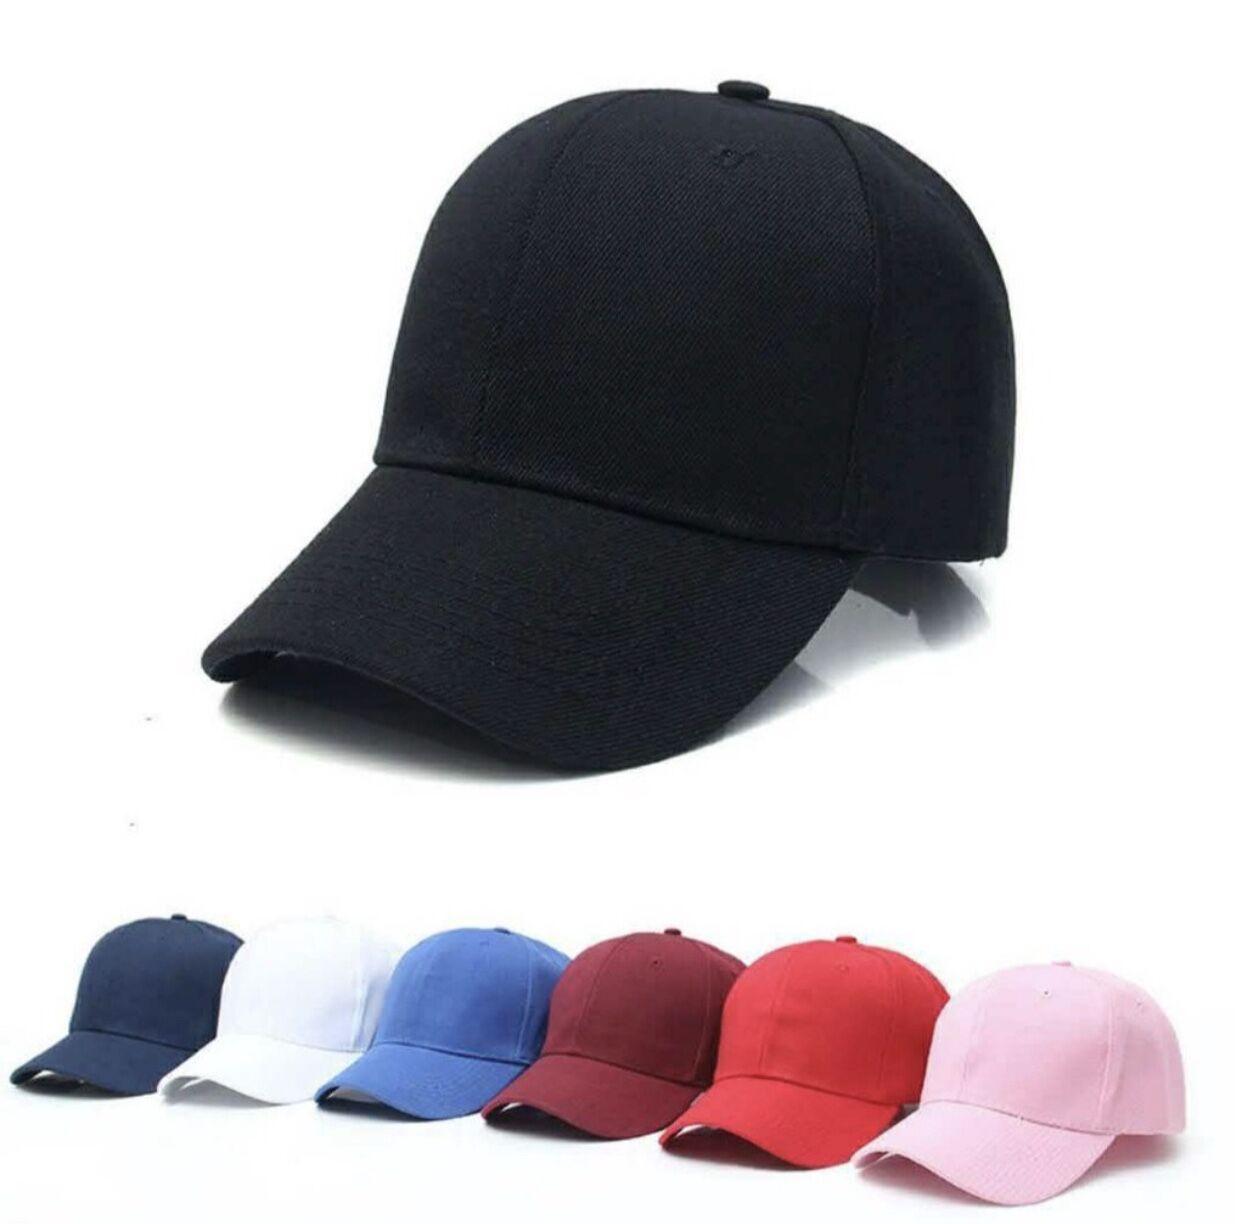 Hats For Men For Sale Mens Hats Online Deals Prices In - arturo plain baseball cap unplain baseball cap unisex